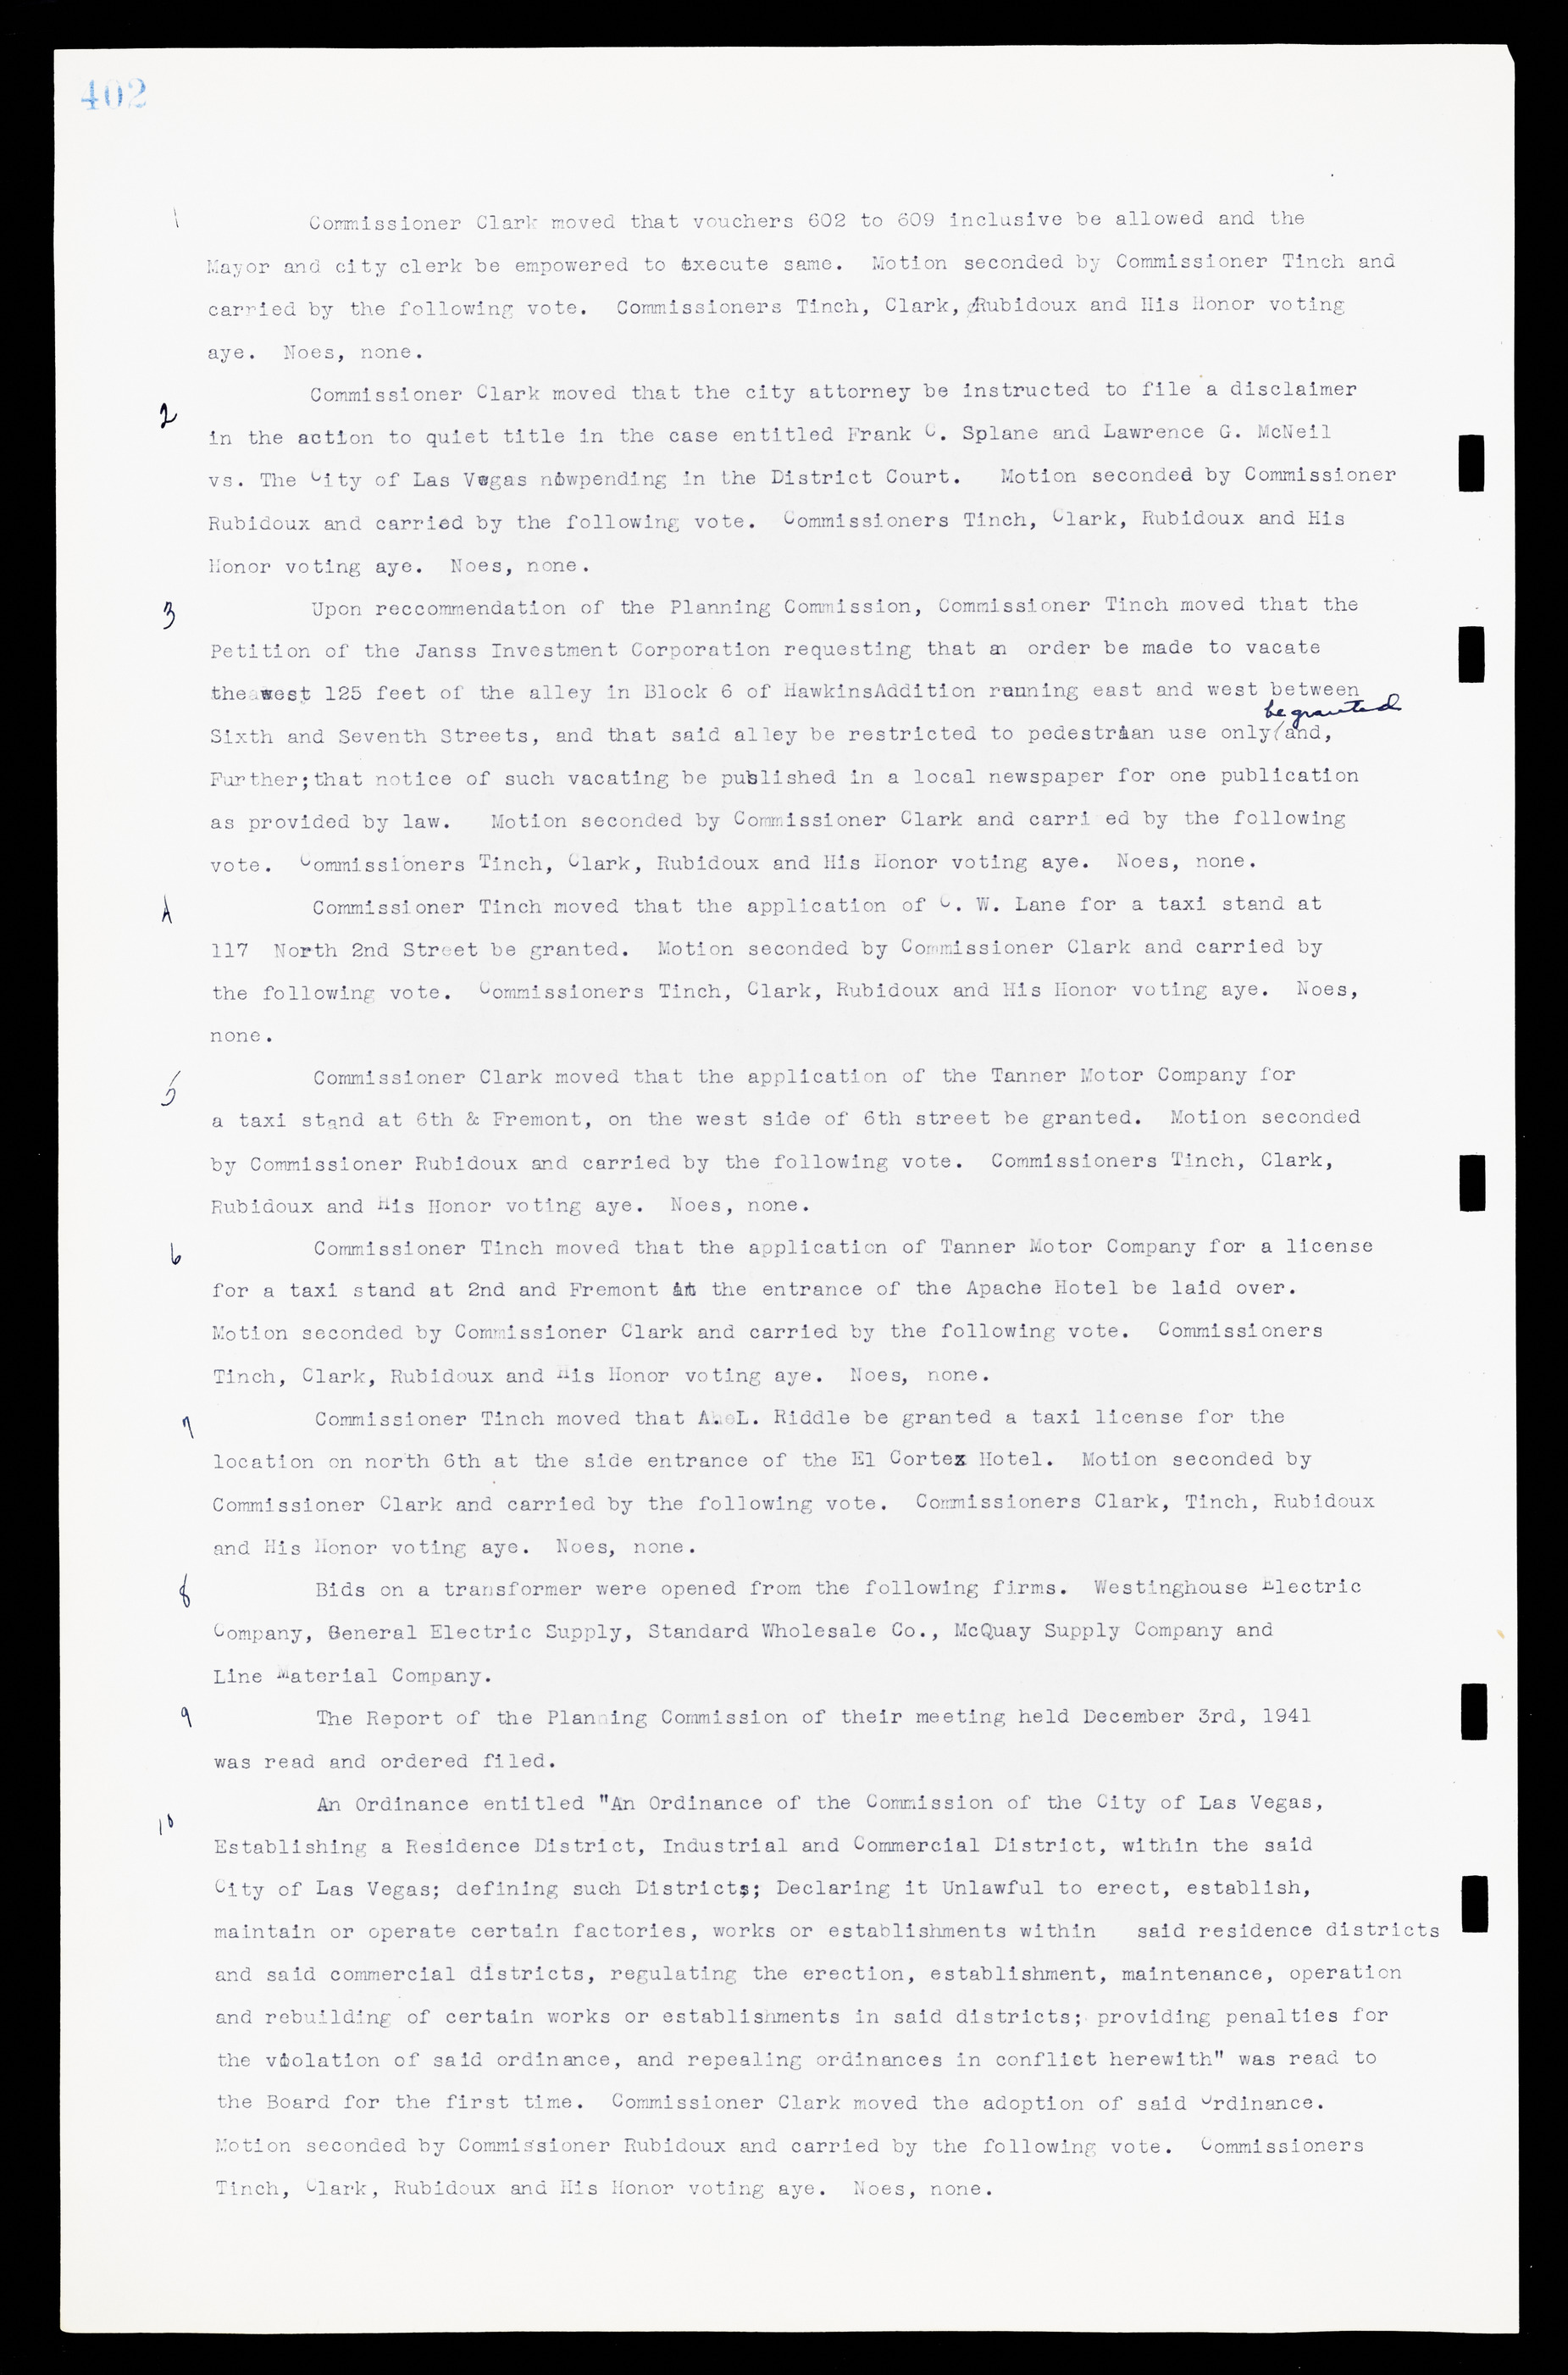 Las Vegas City Commission Minutes, February 17, 1937 to August 4, 1942, lvc000004-428